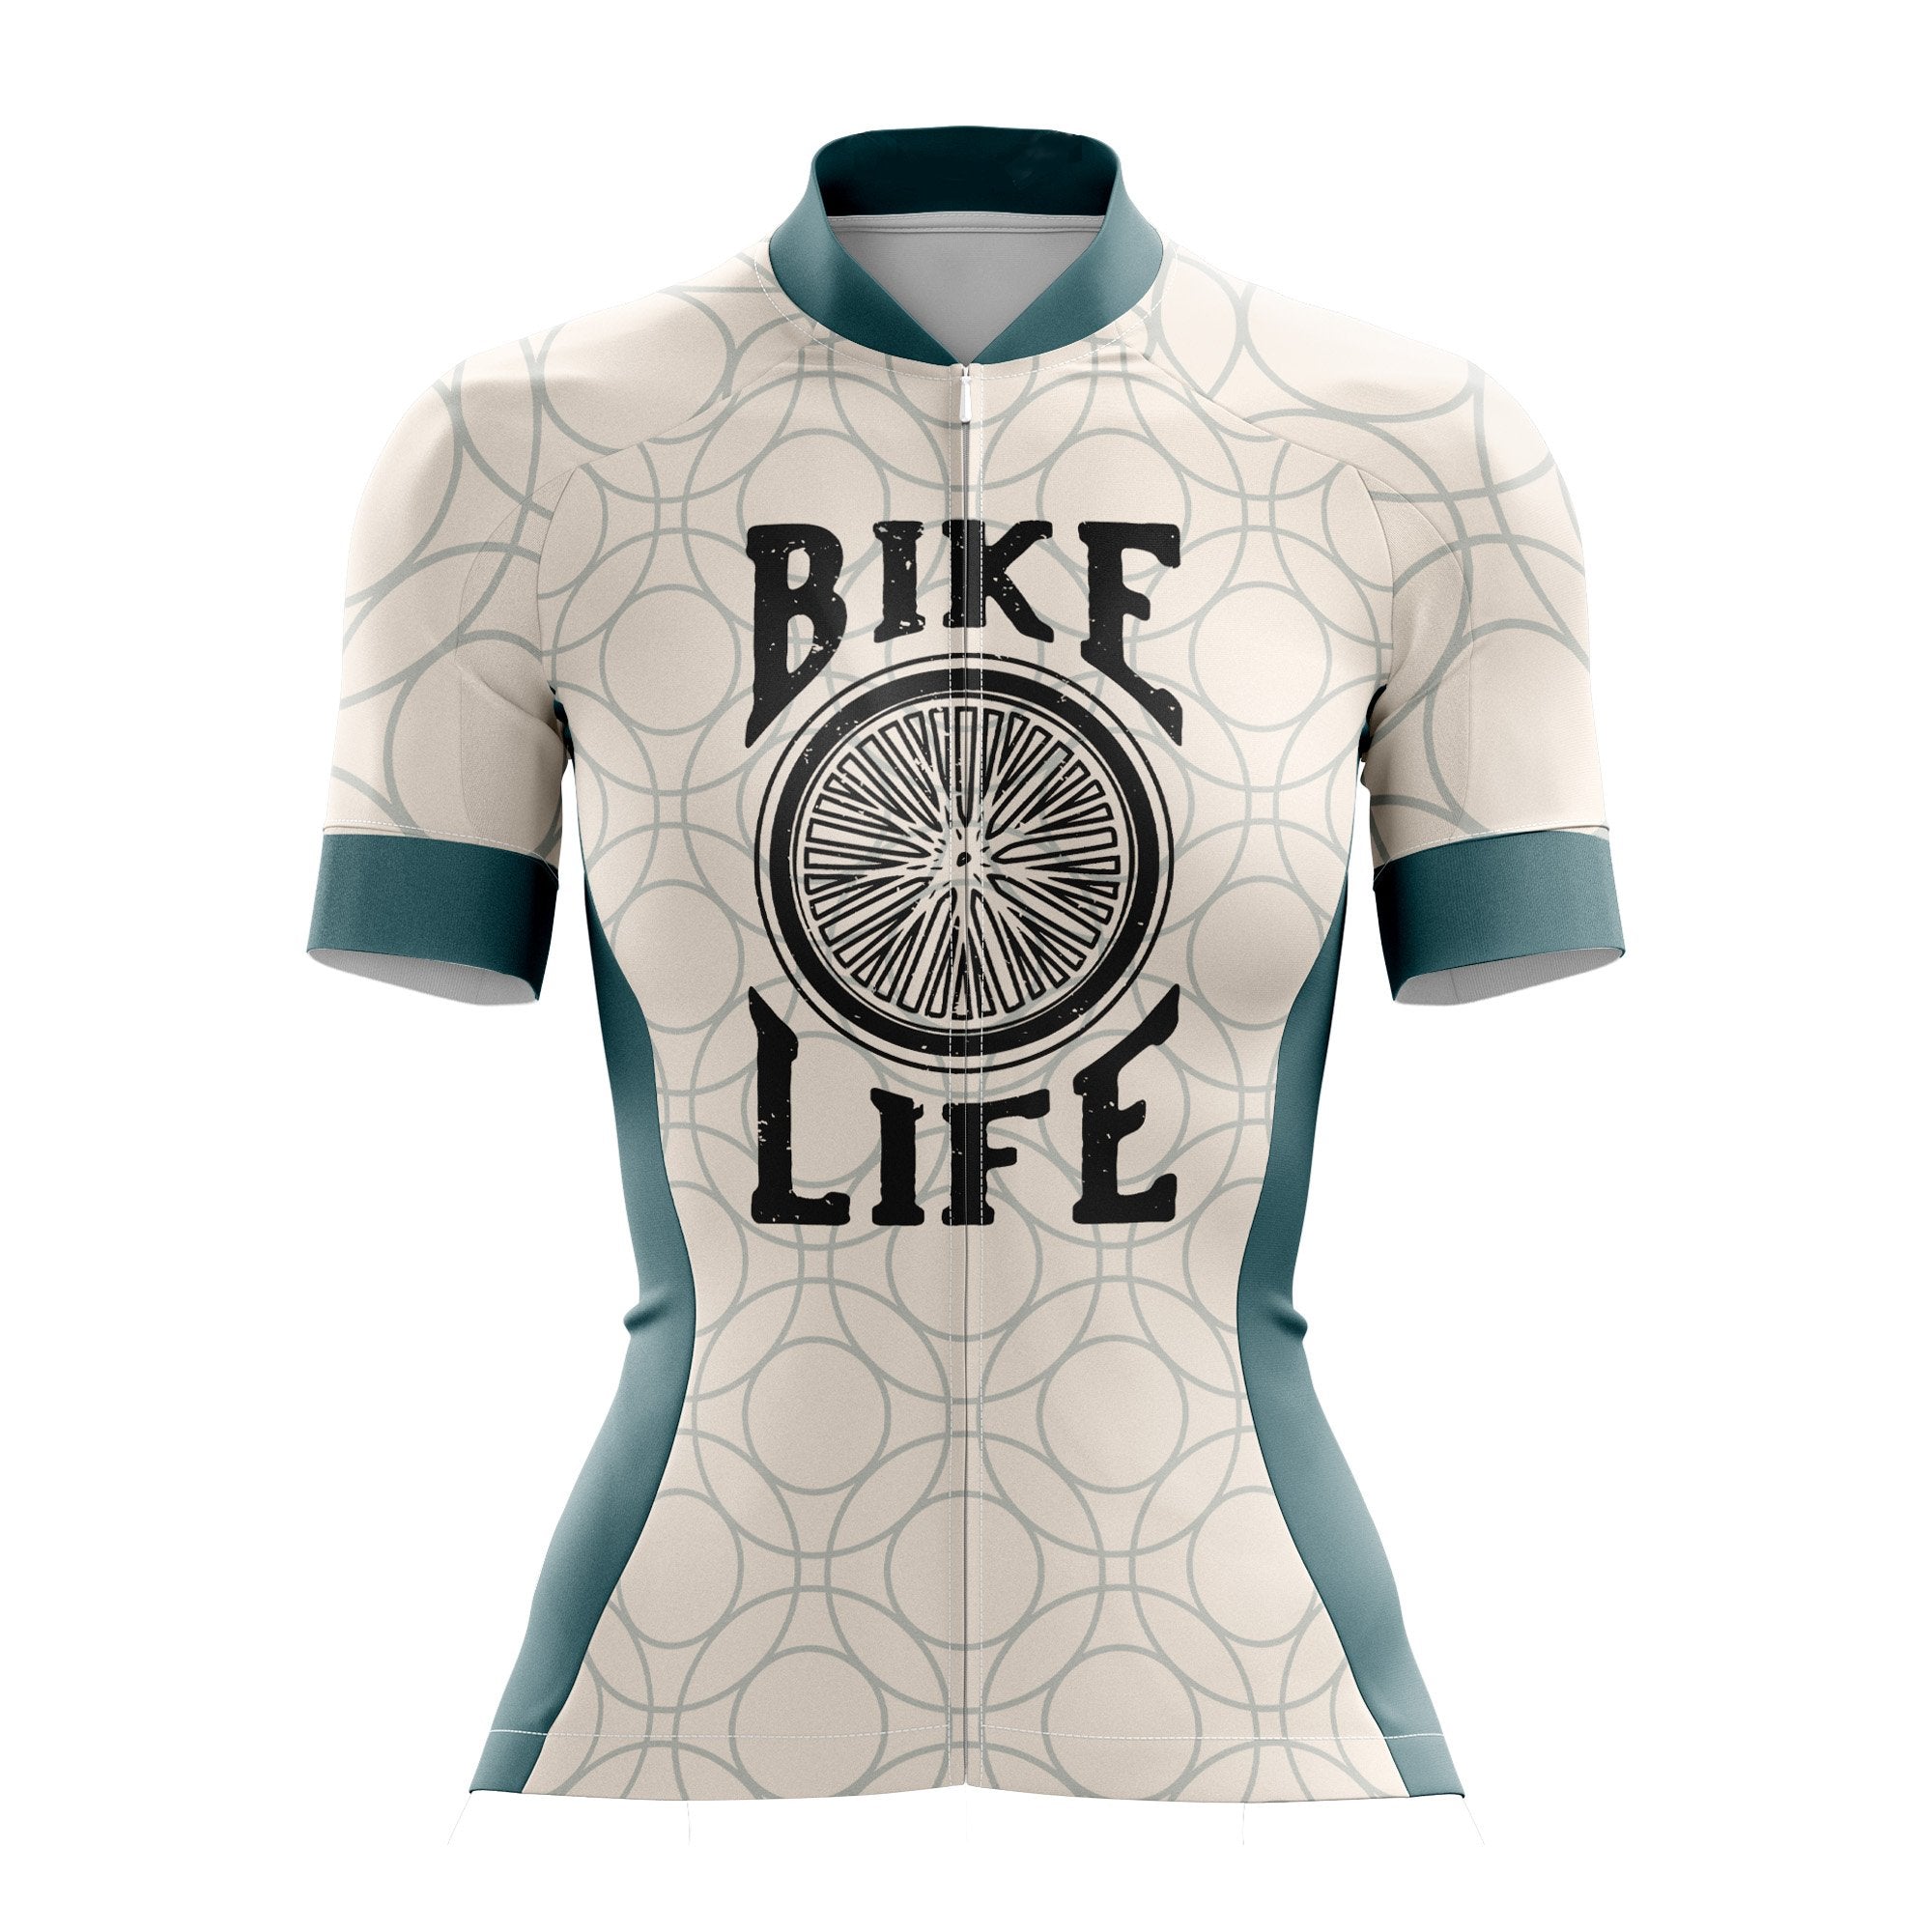 Bike Life Female Cycling Jersey – Cool Dude Cycling